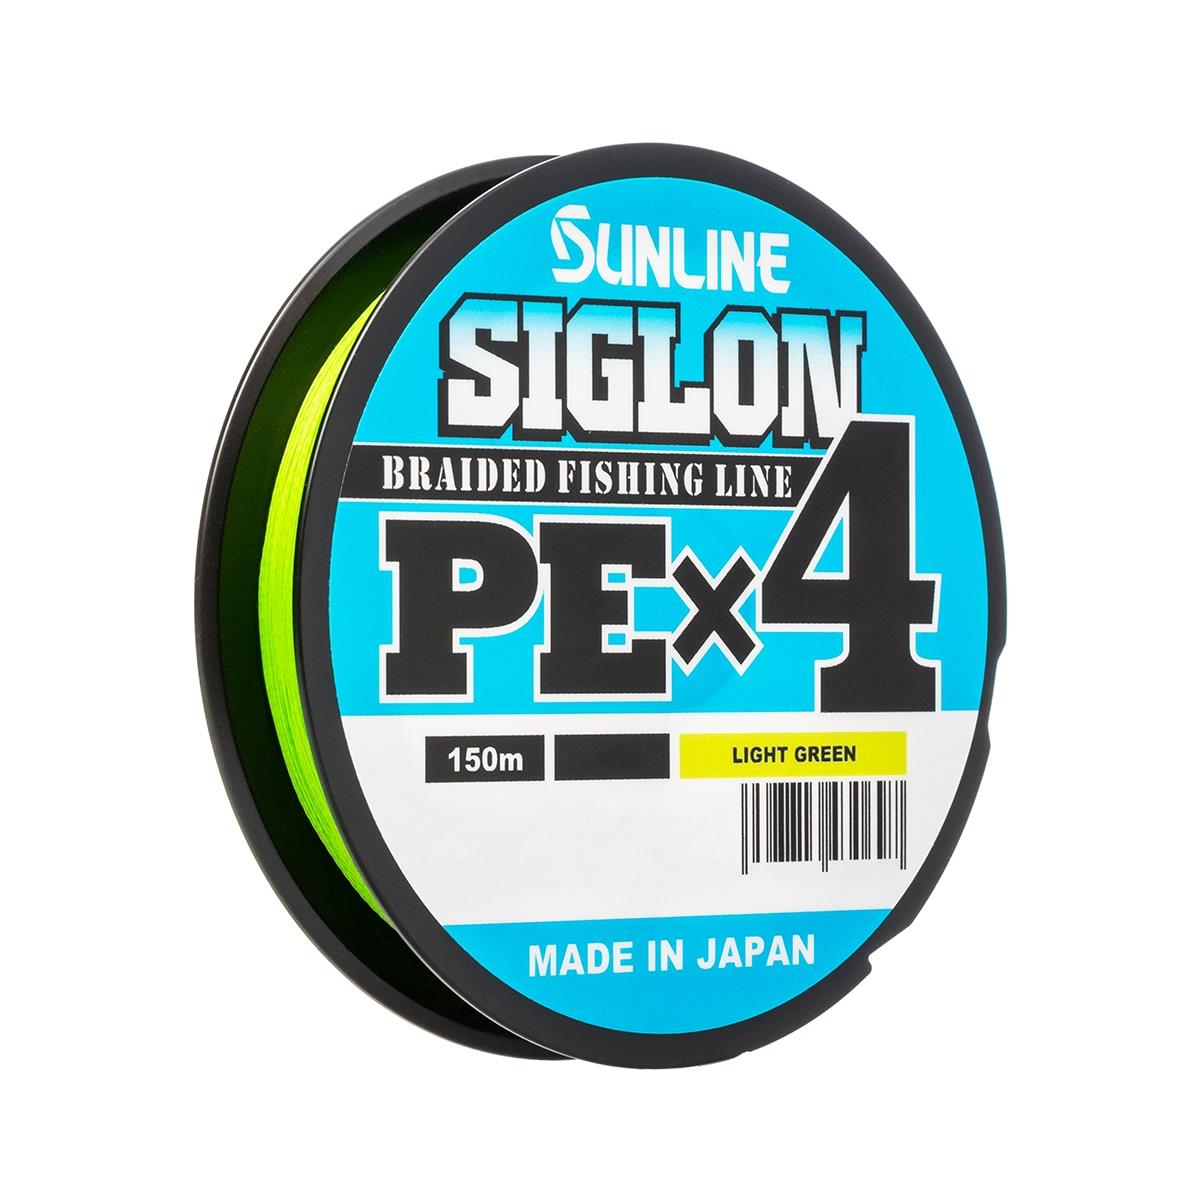 Шнур SIGLON PE×4 150 м (Light green) Sunline 255038 SIGLON PE×4 150M(light green) #2.5/40LB - фото 1